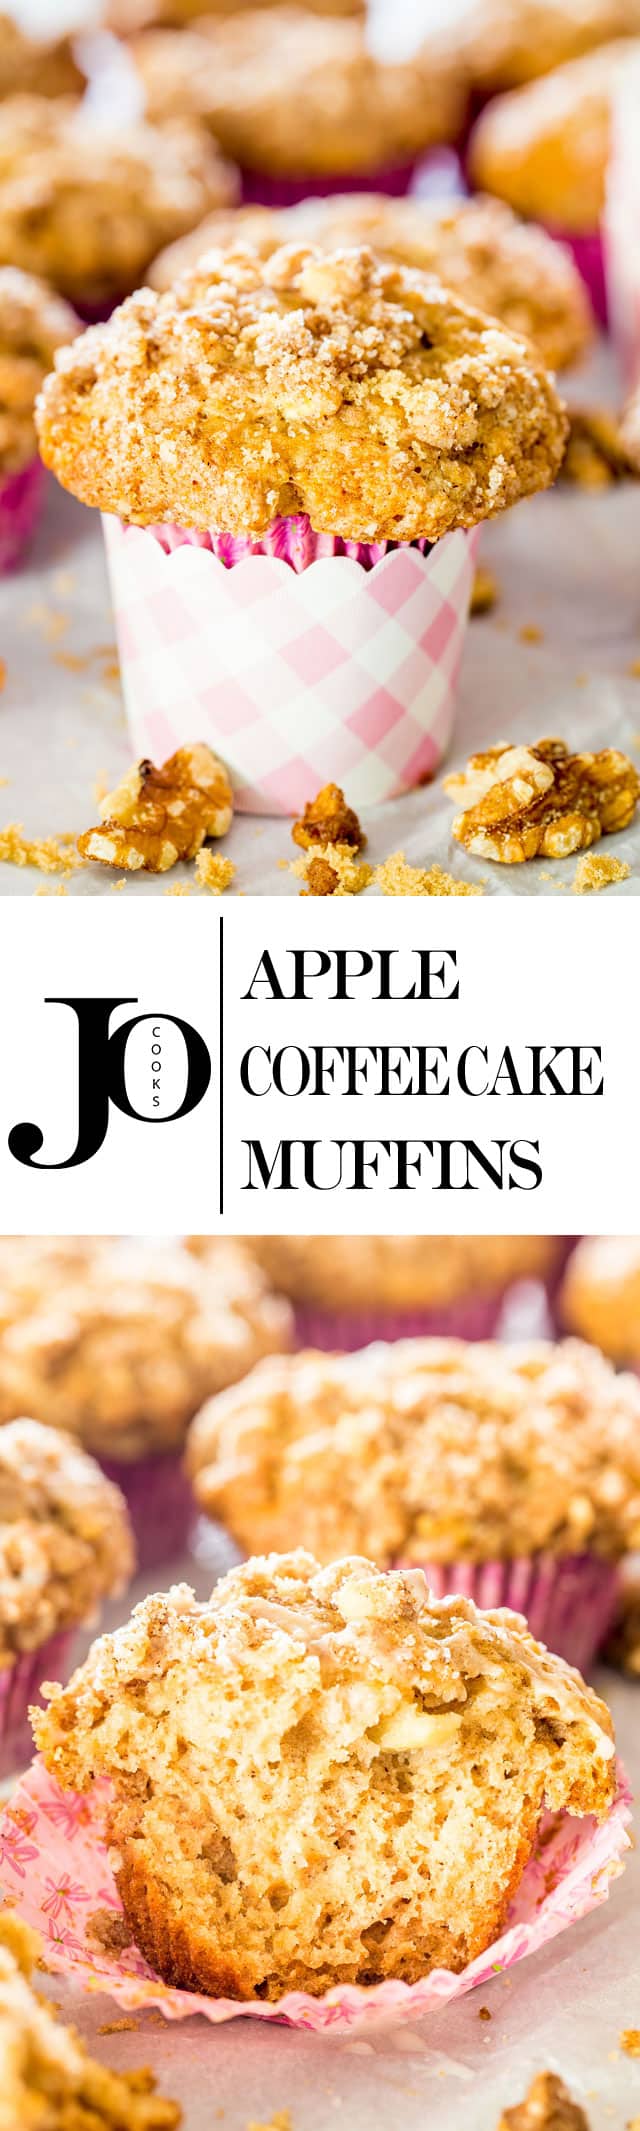 apple coffee cake muffins